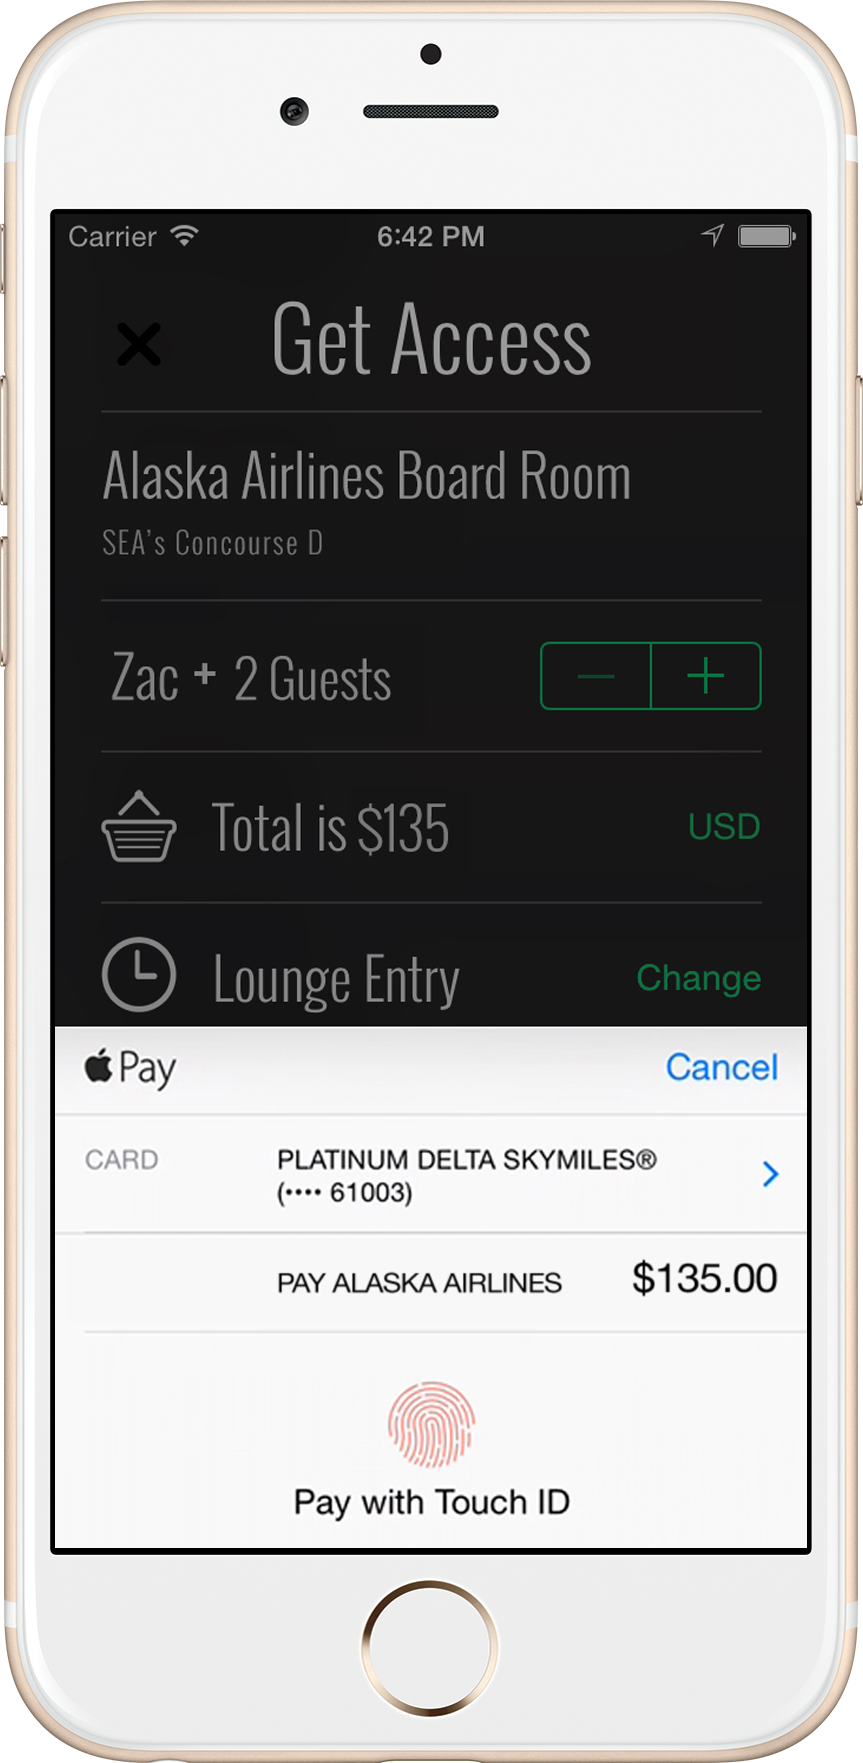 Alaska Airlines Board Room Apple Pay